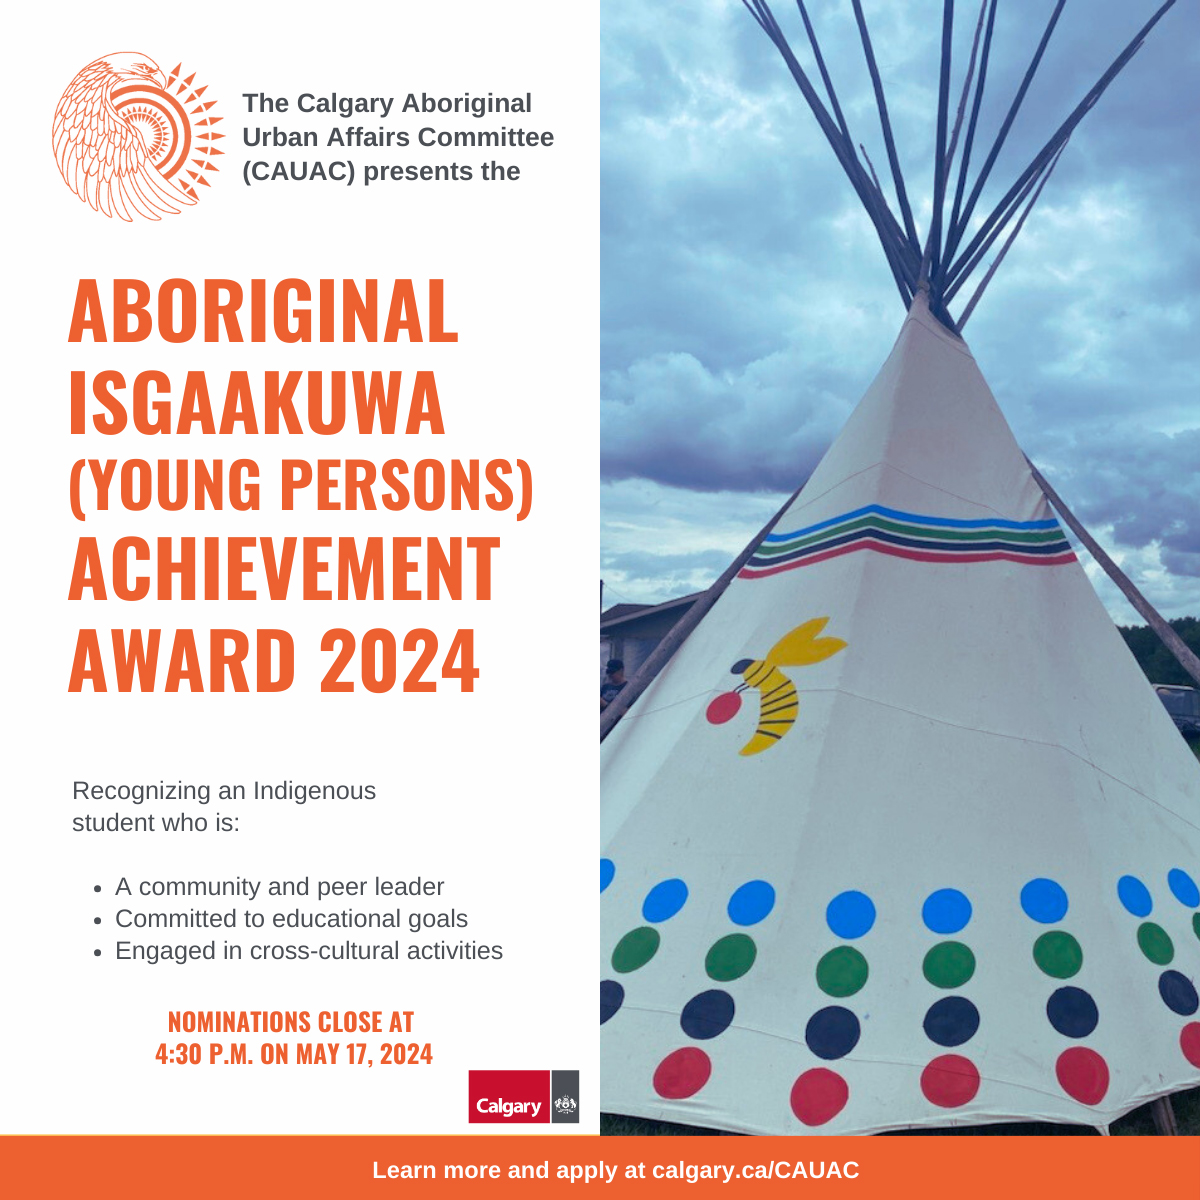 Calgary Aboriginal Urban Affairs Committee (CAUAC) Aboriginal Youth Achievement Award